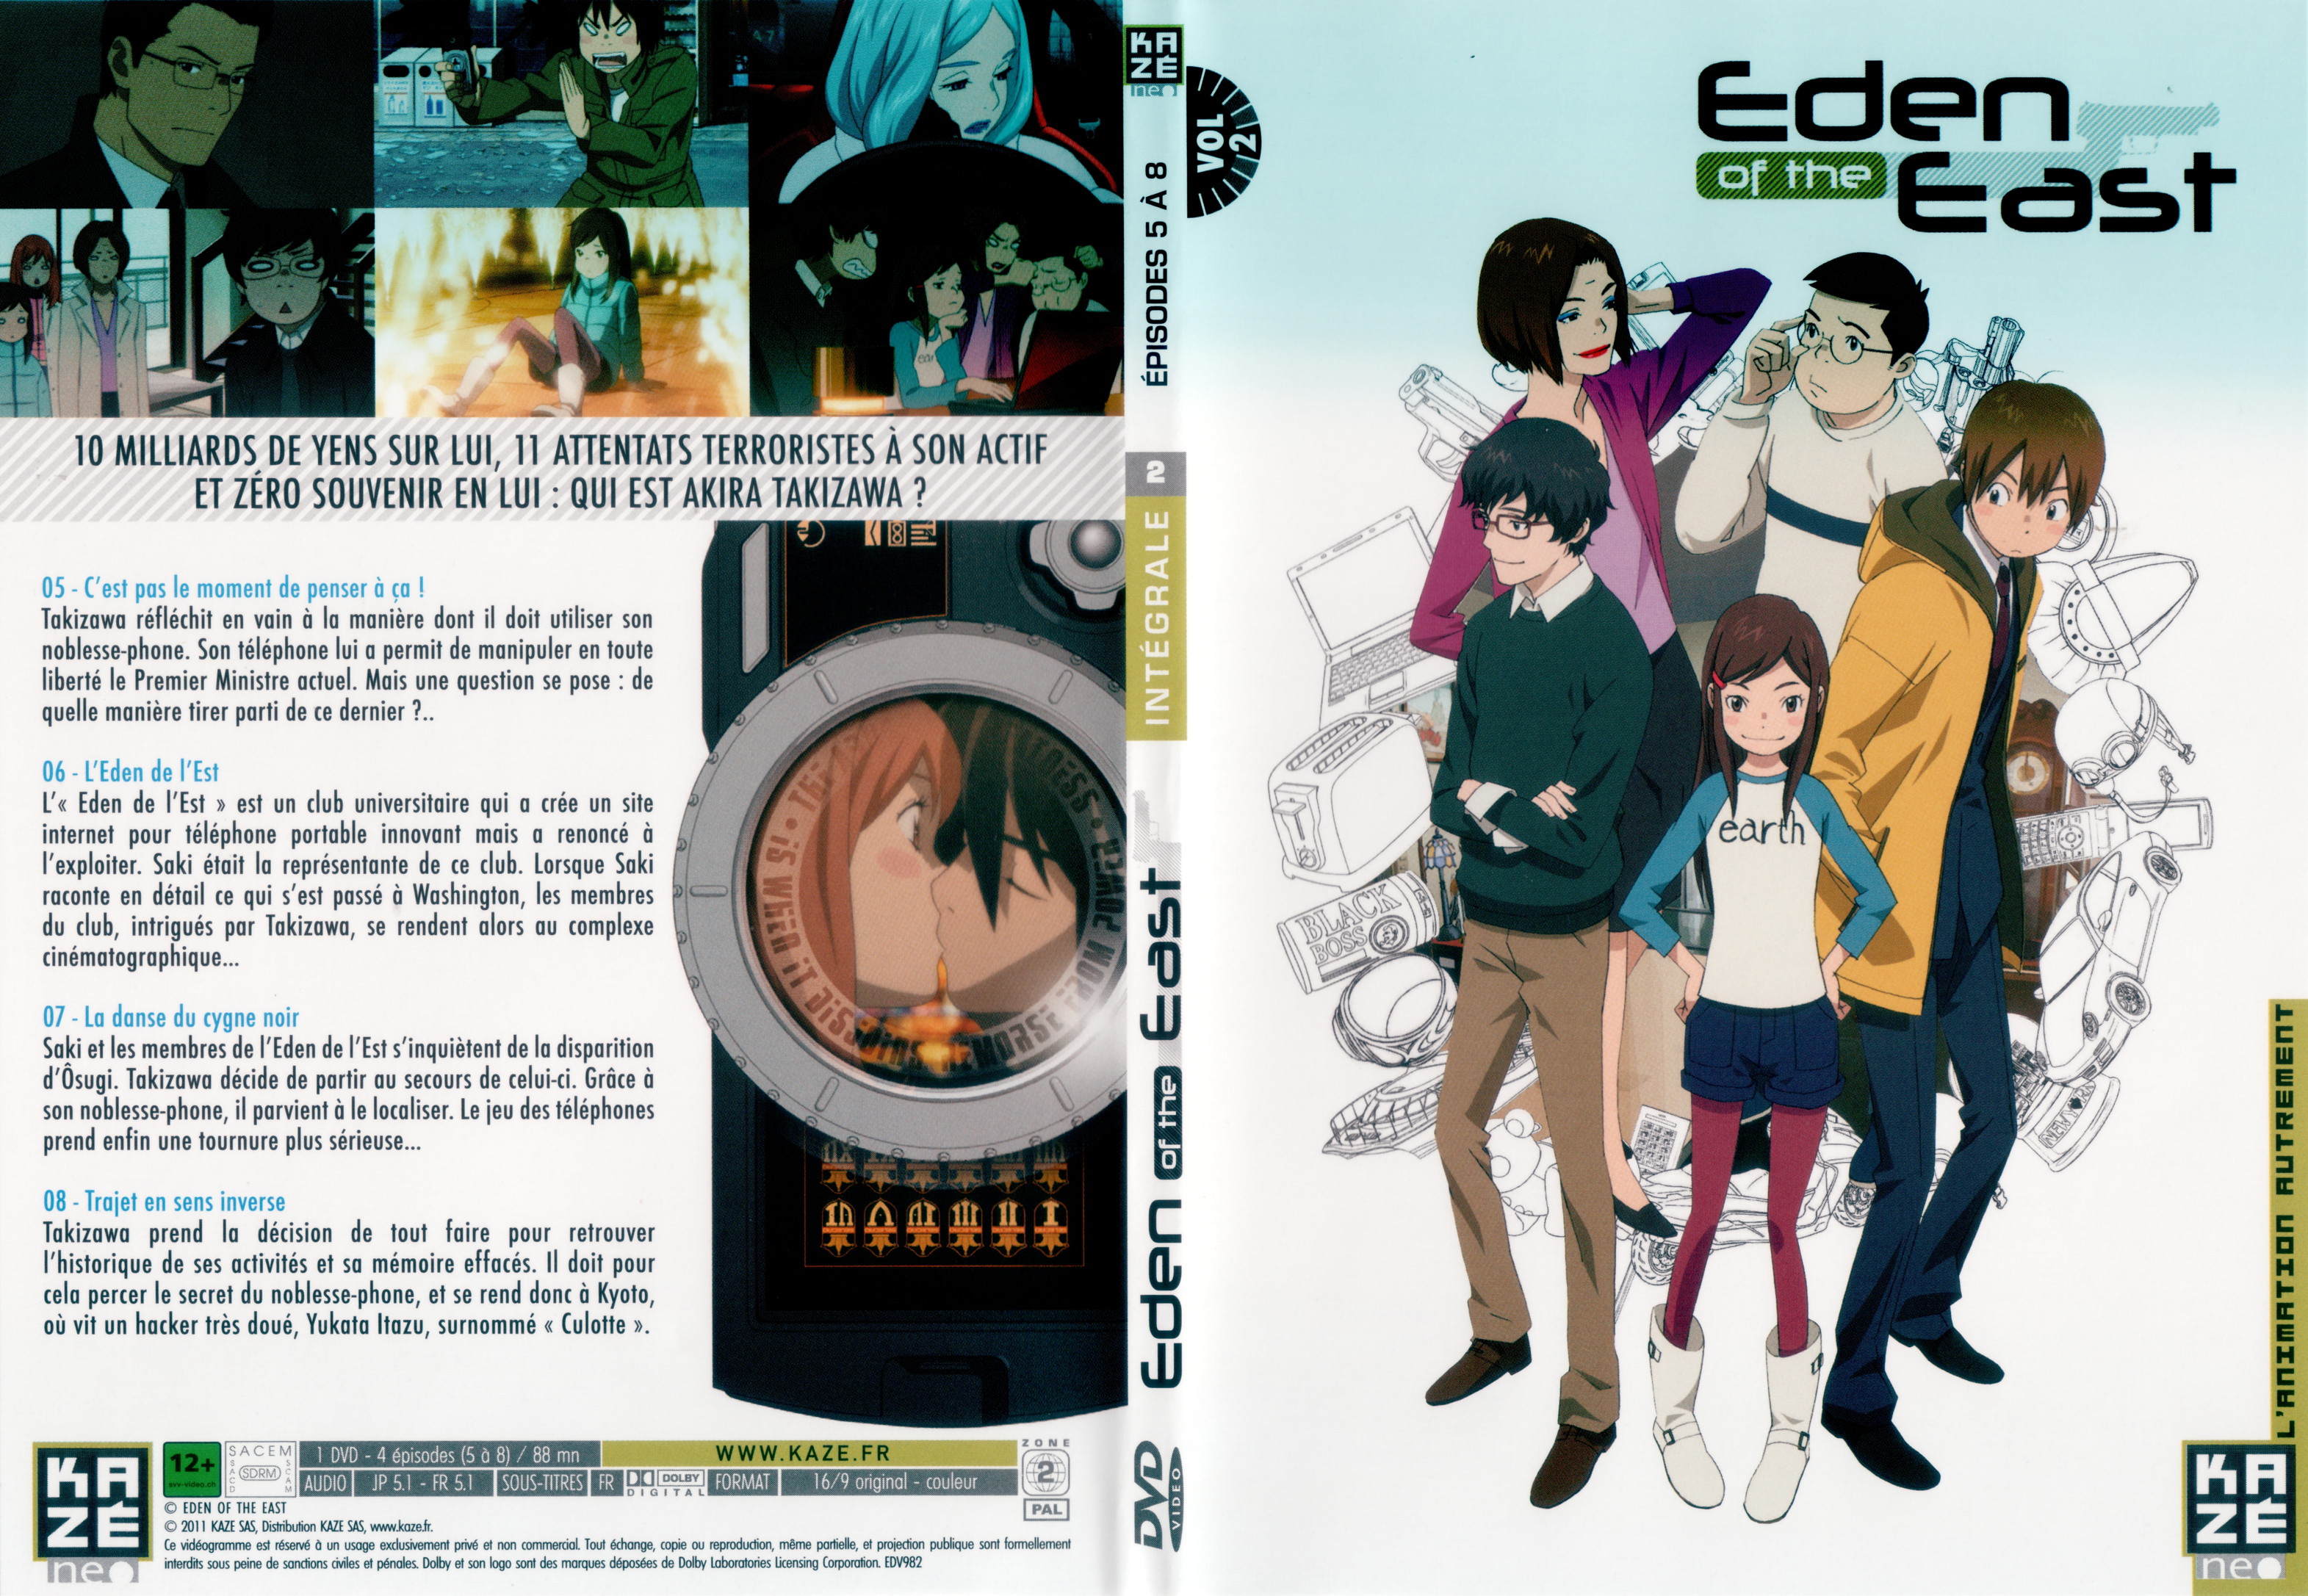 Jaquette DVD Eden of the east Intgrale vol 02